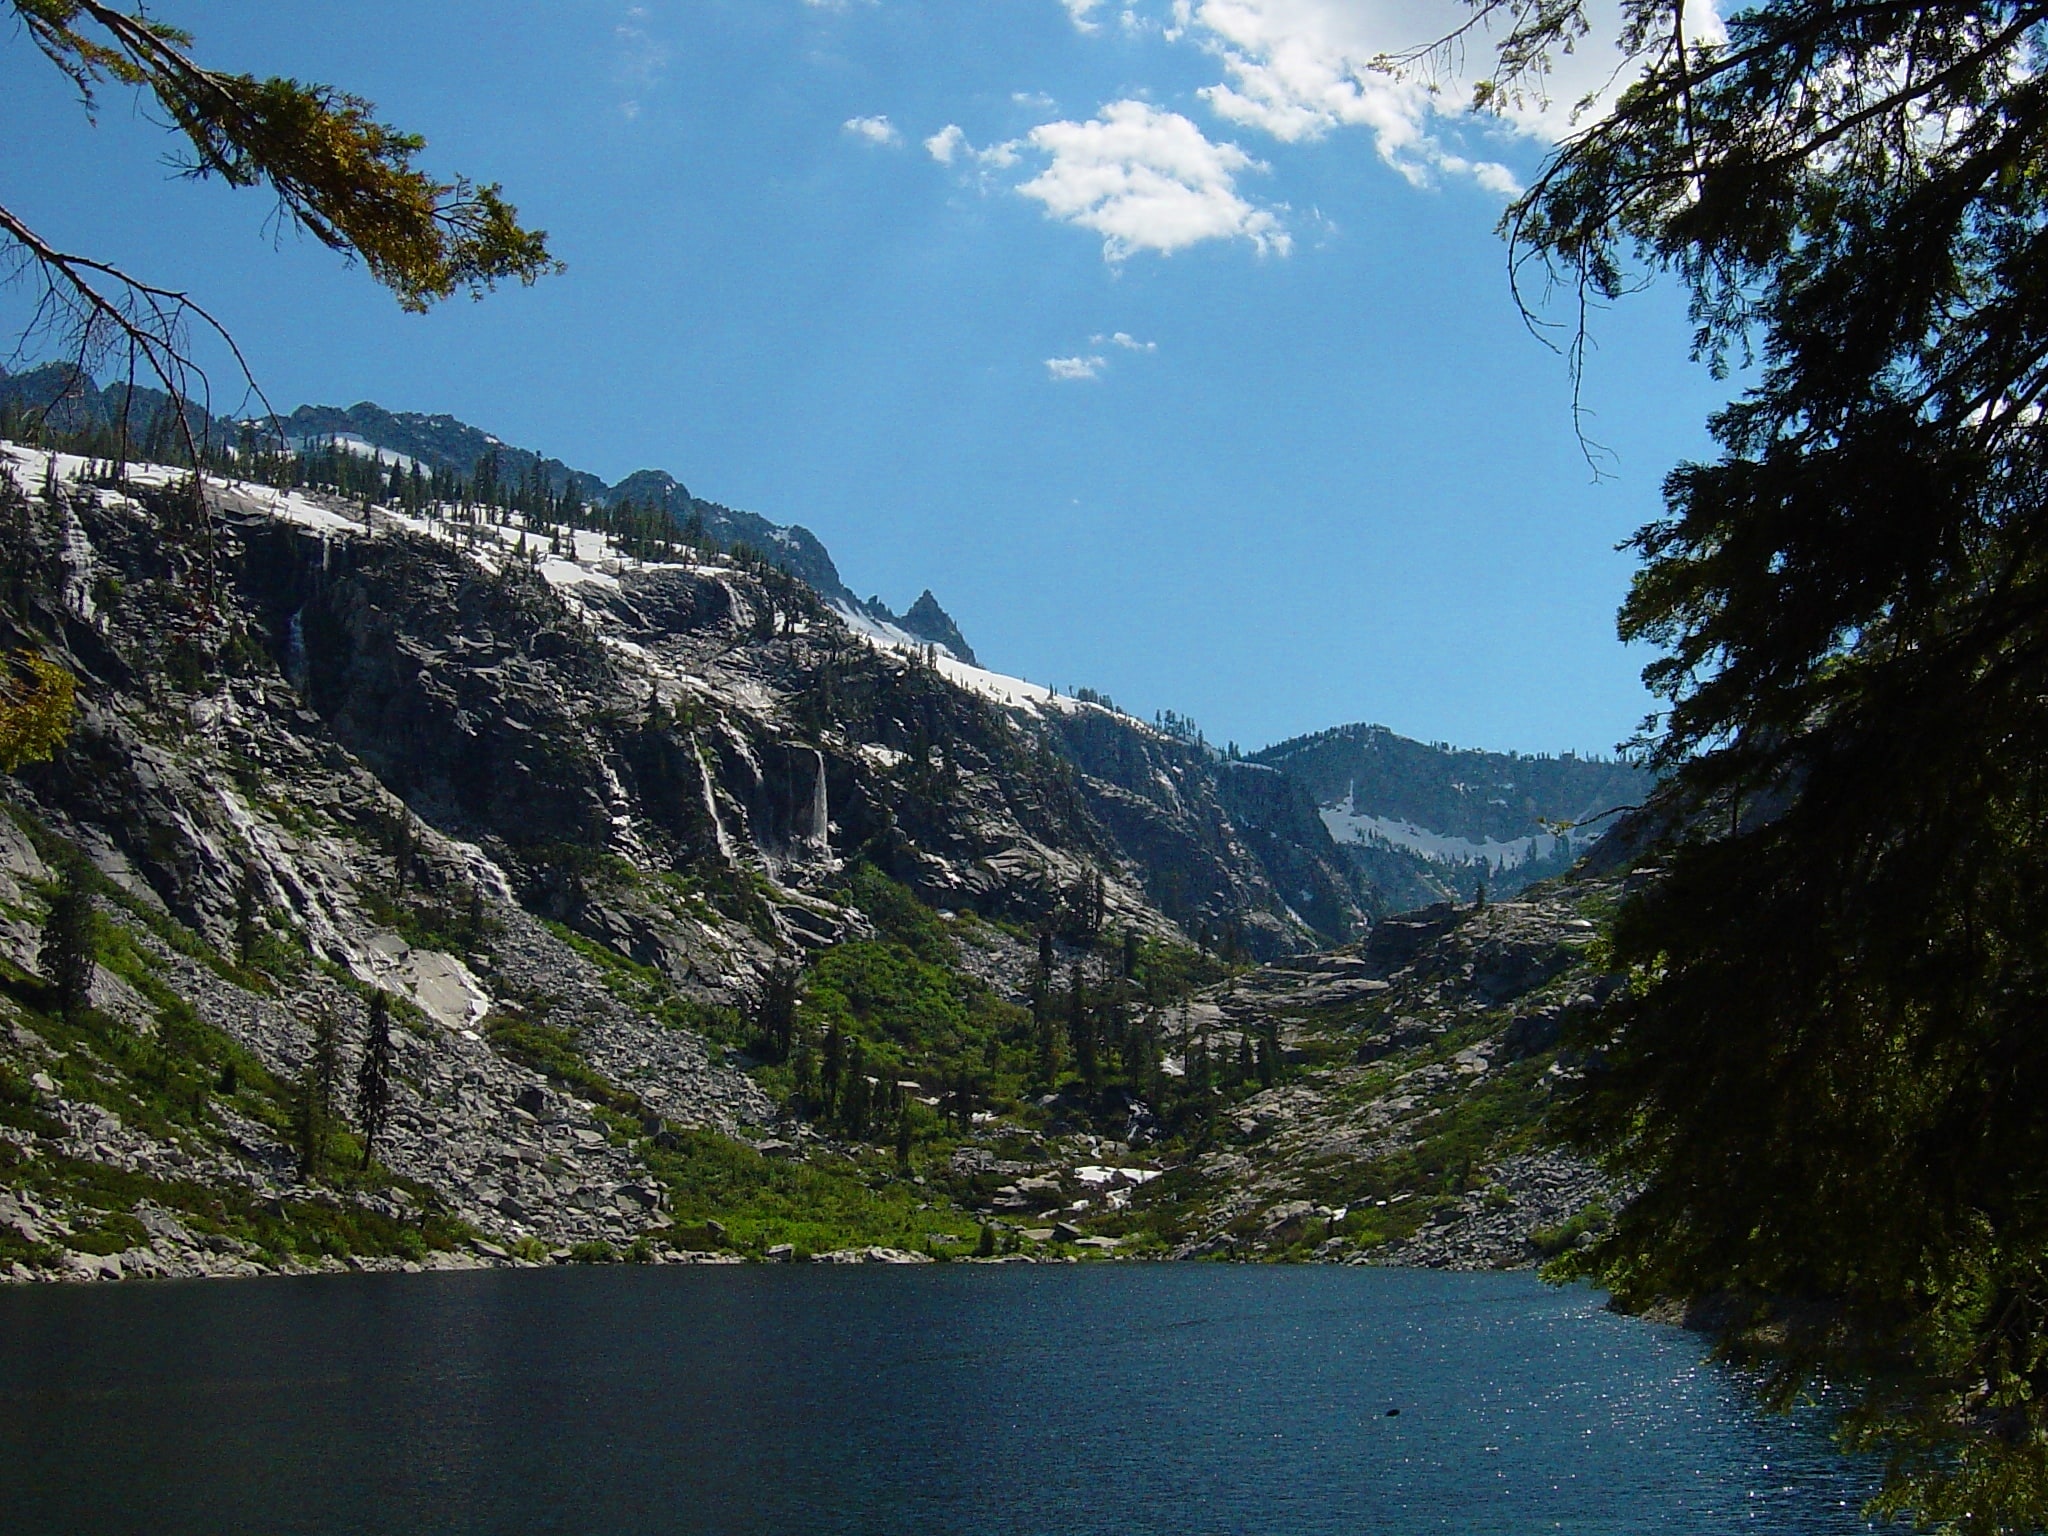 Trinity Alps Wilderness, United States